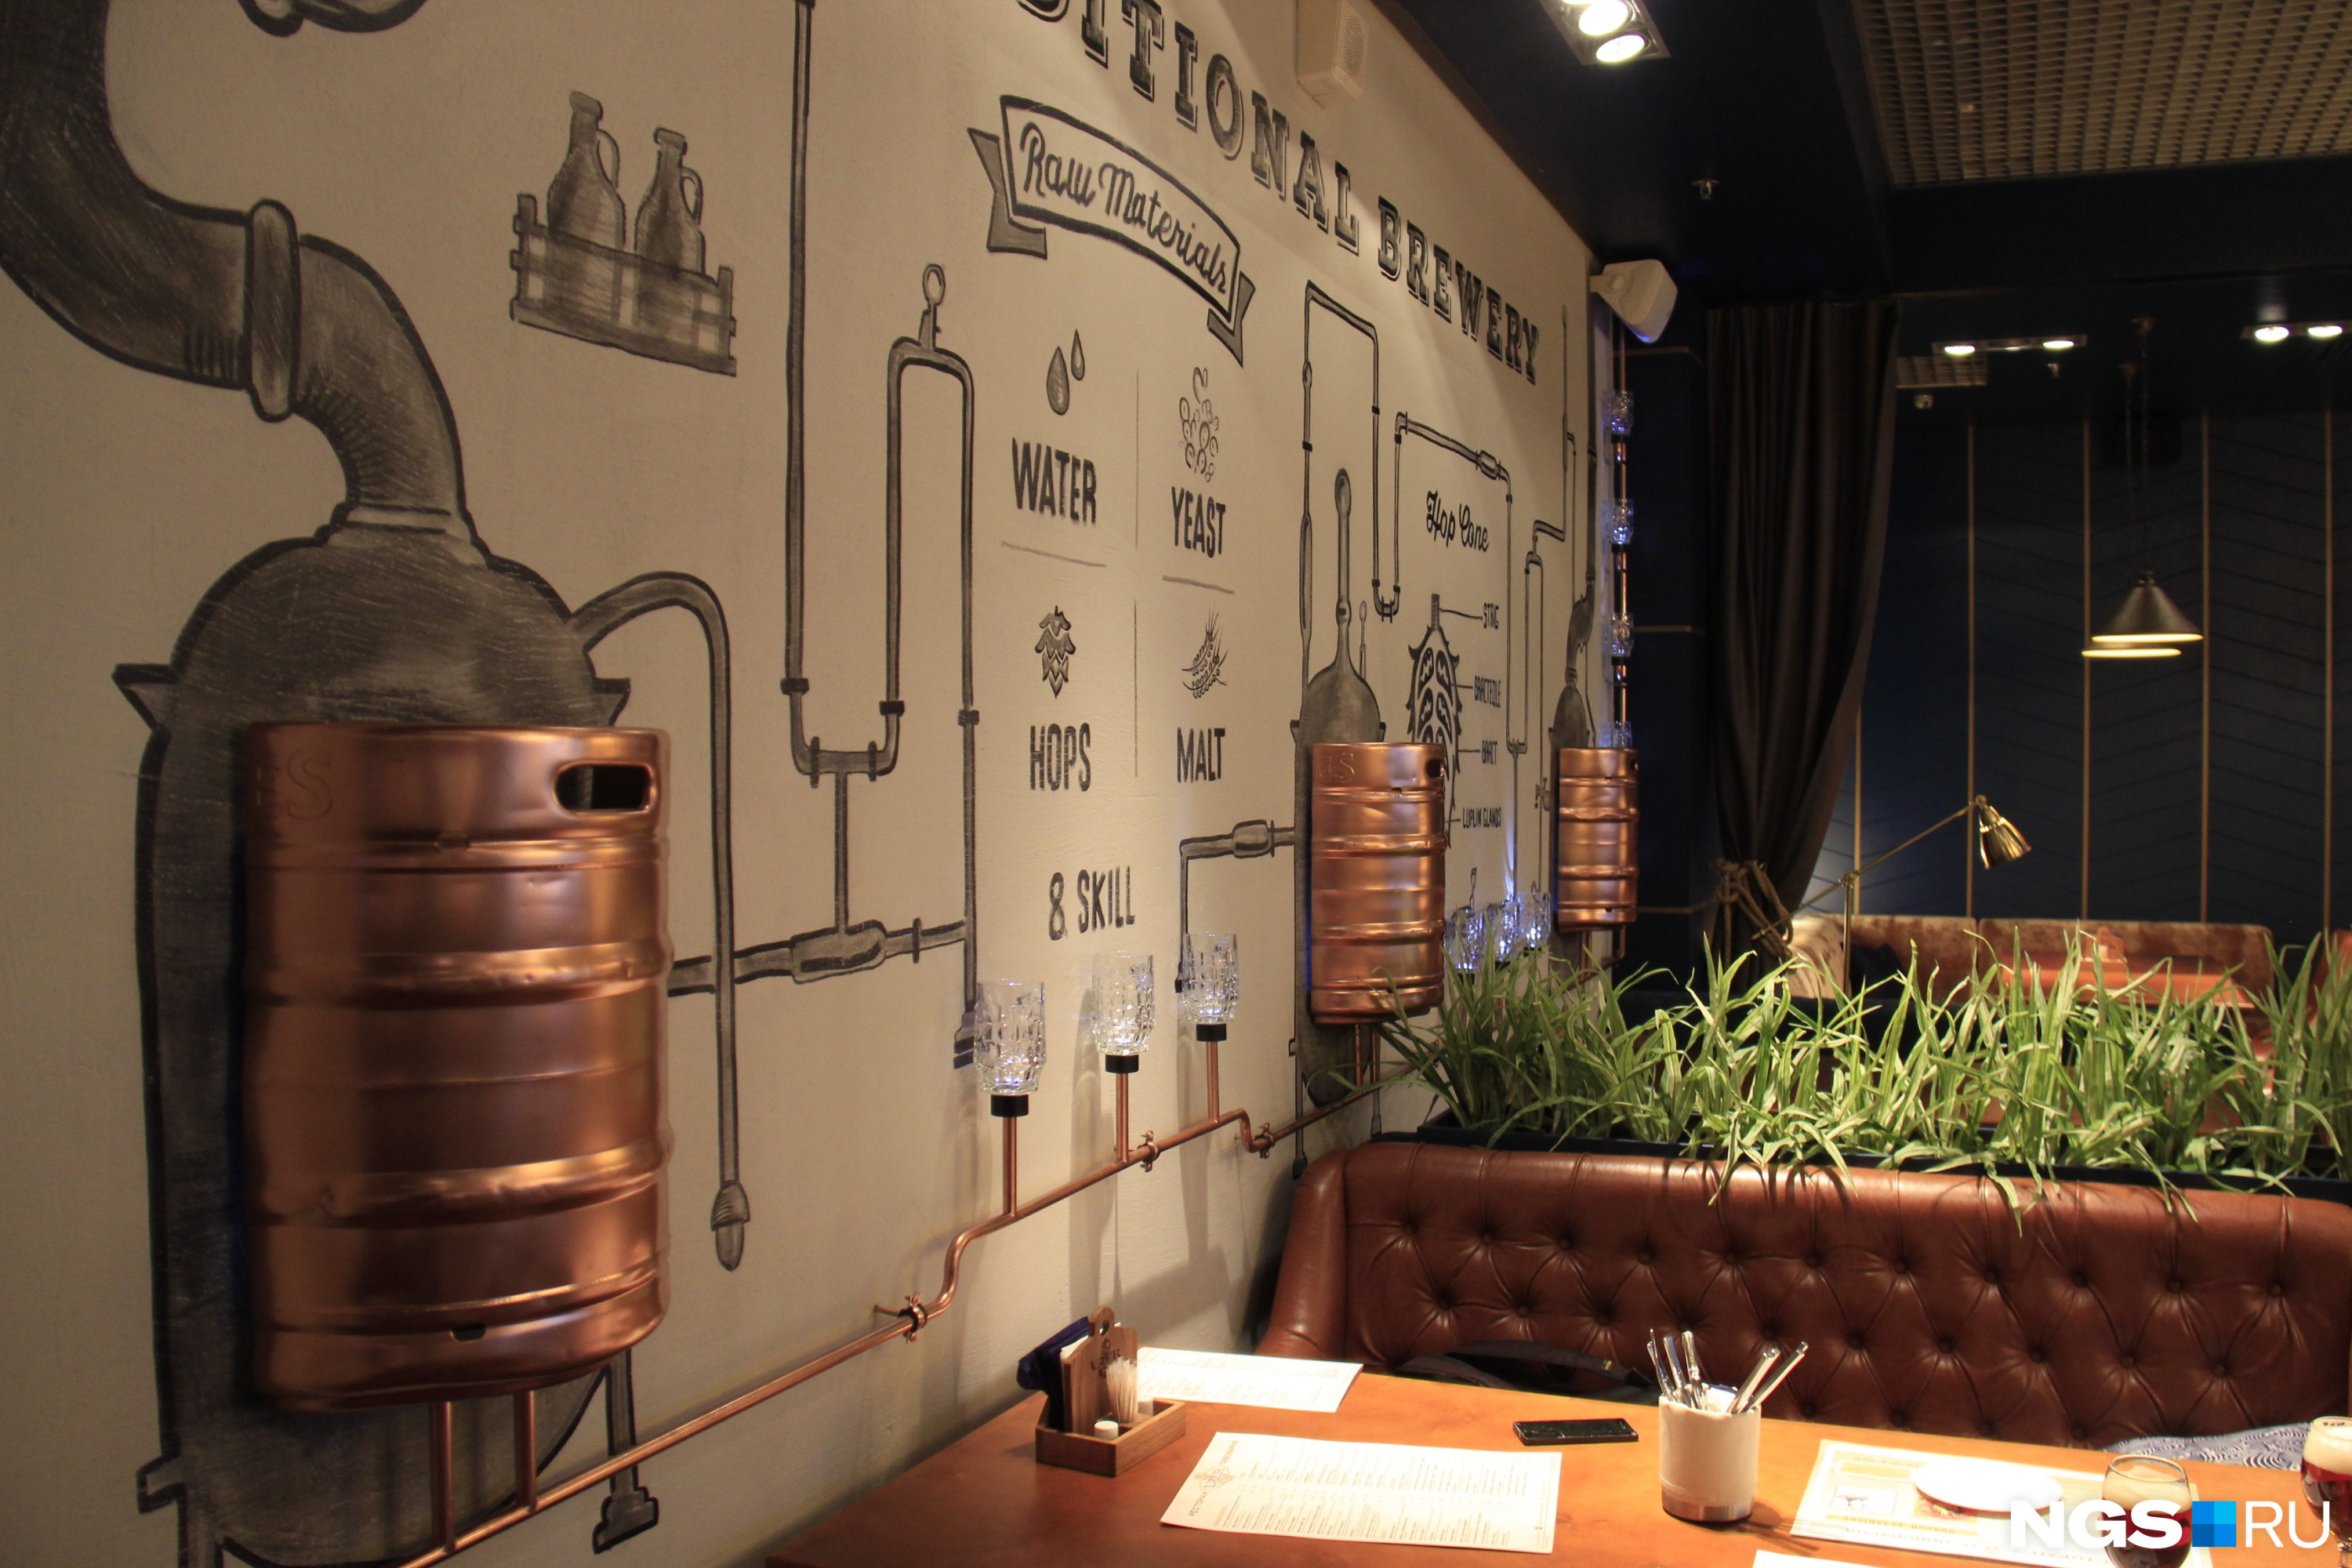 На стене изображена схема пивоваренного производства